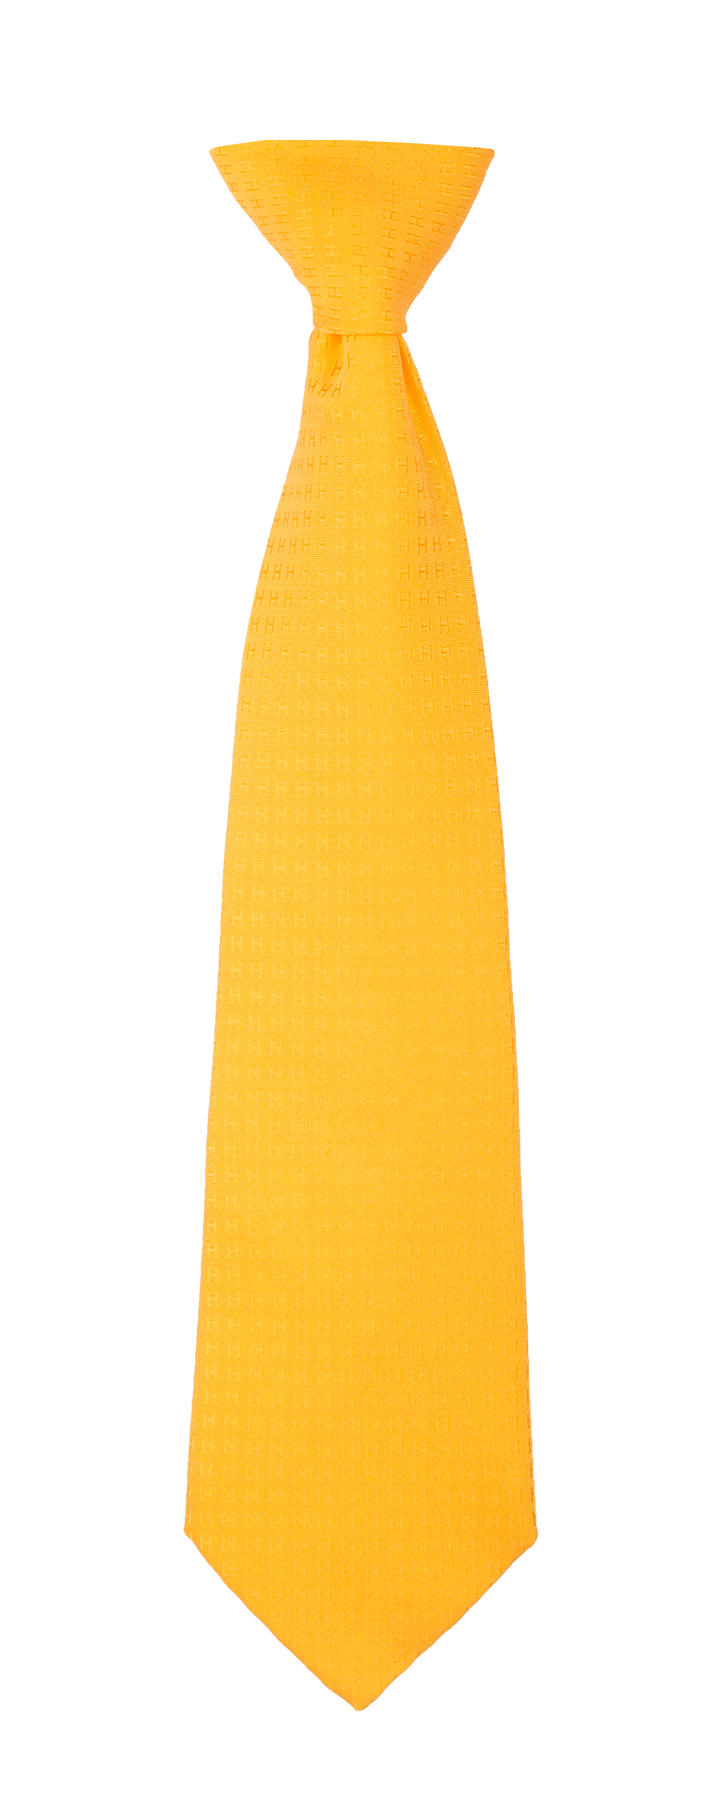 The Stylish Hermes Yellow Tie